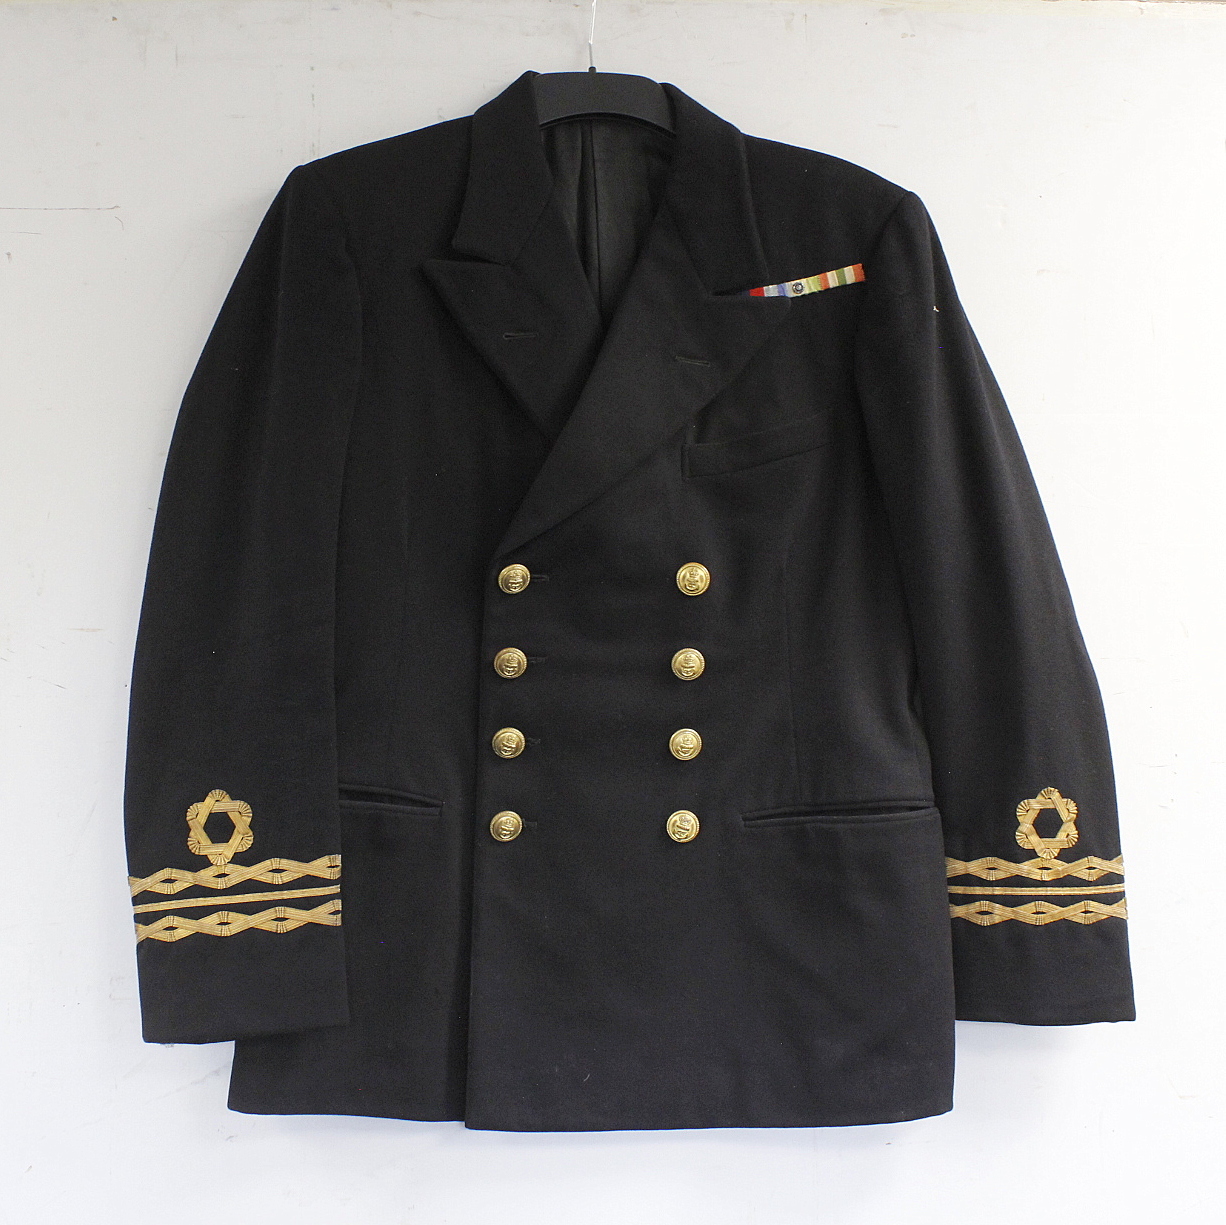 British Royal Navy dress uniform jacket having Gieves Ltd label "L/5/43 23/13419 D Macdonald A1",